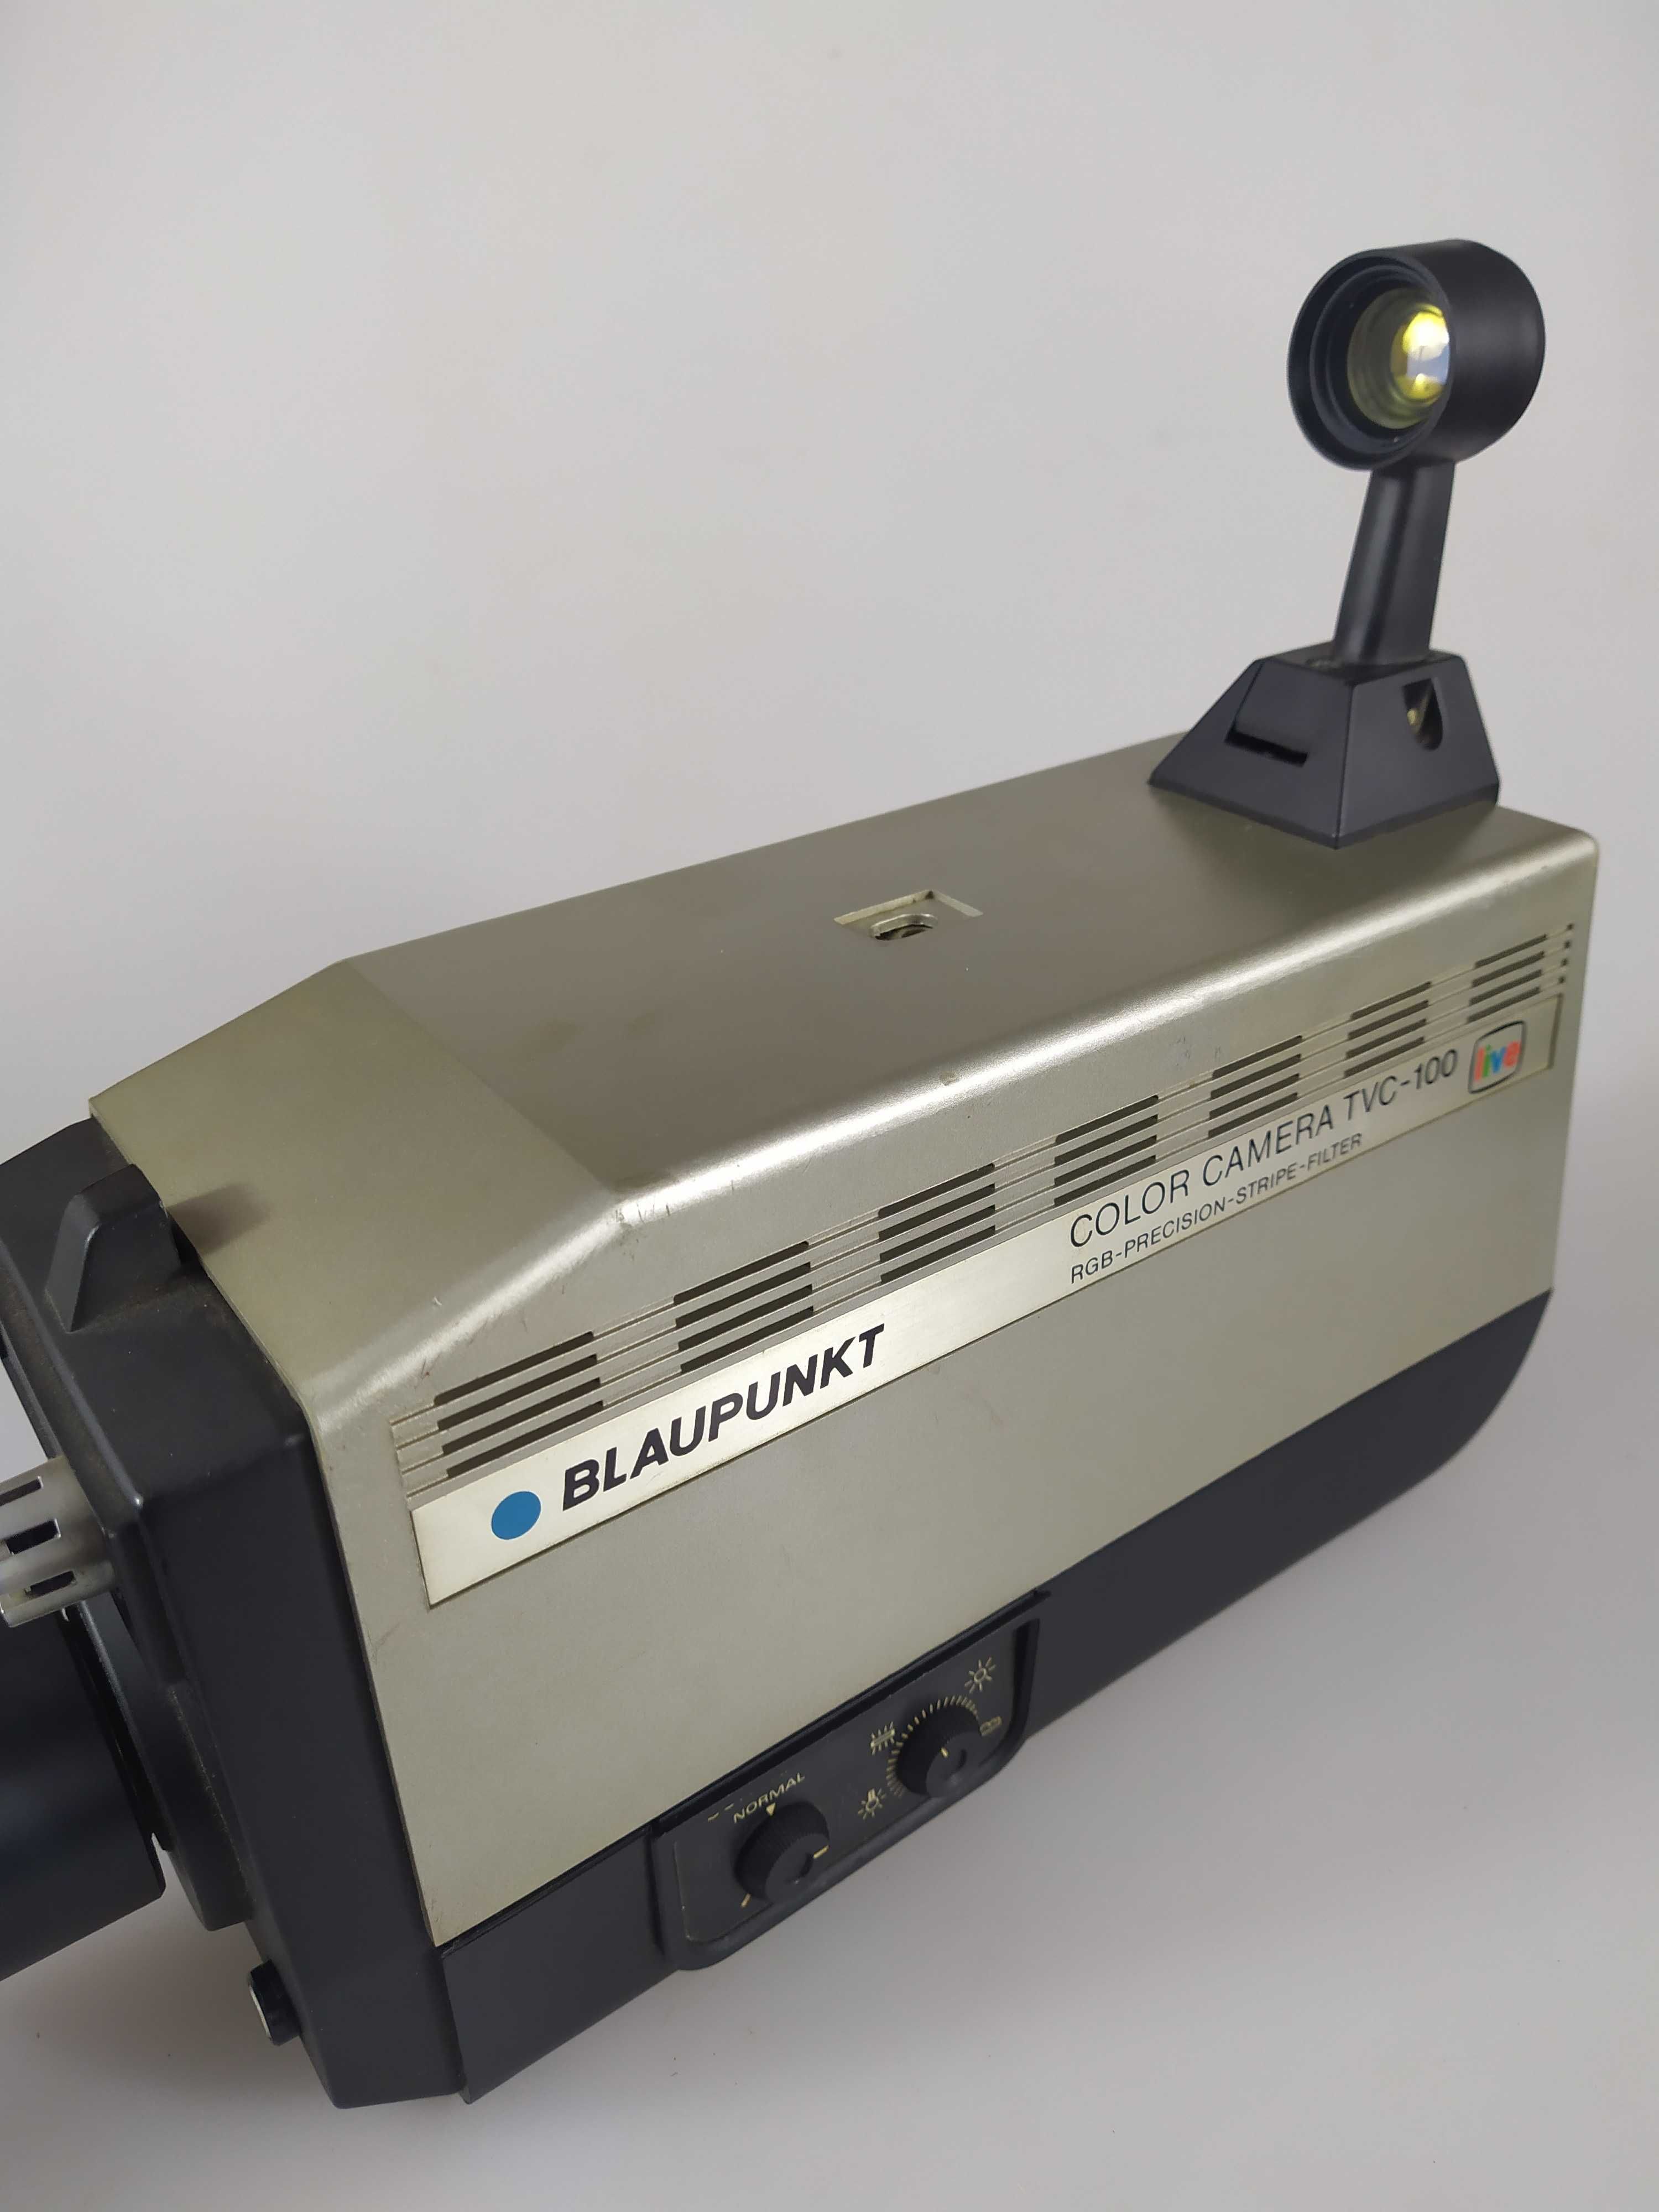 Blaupunkt Color Camera TVC-100 kamera z zasilaczem, Made in Japan 1985